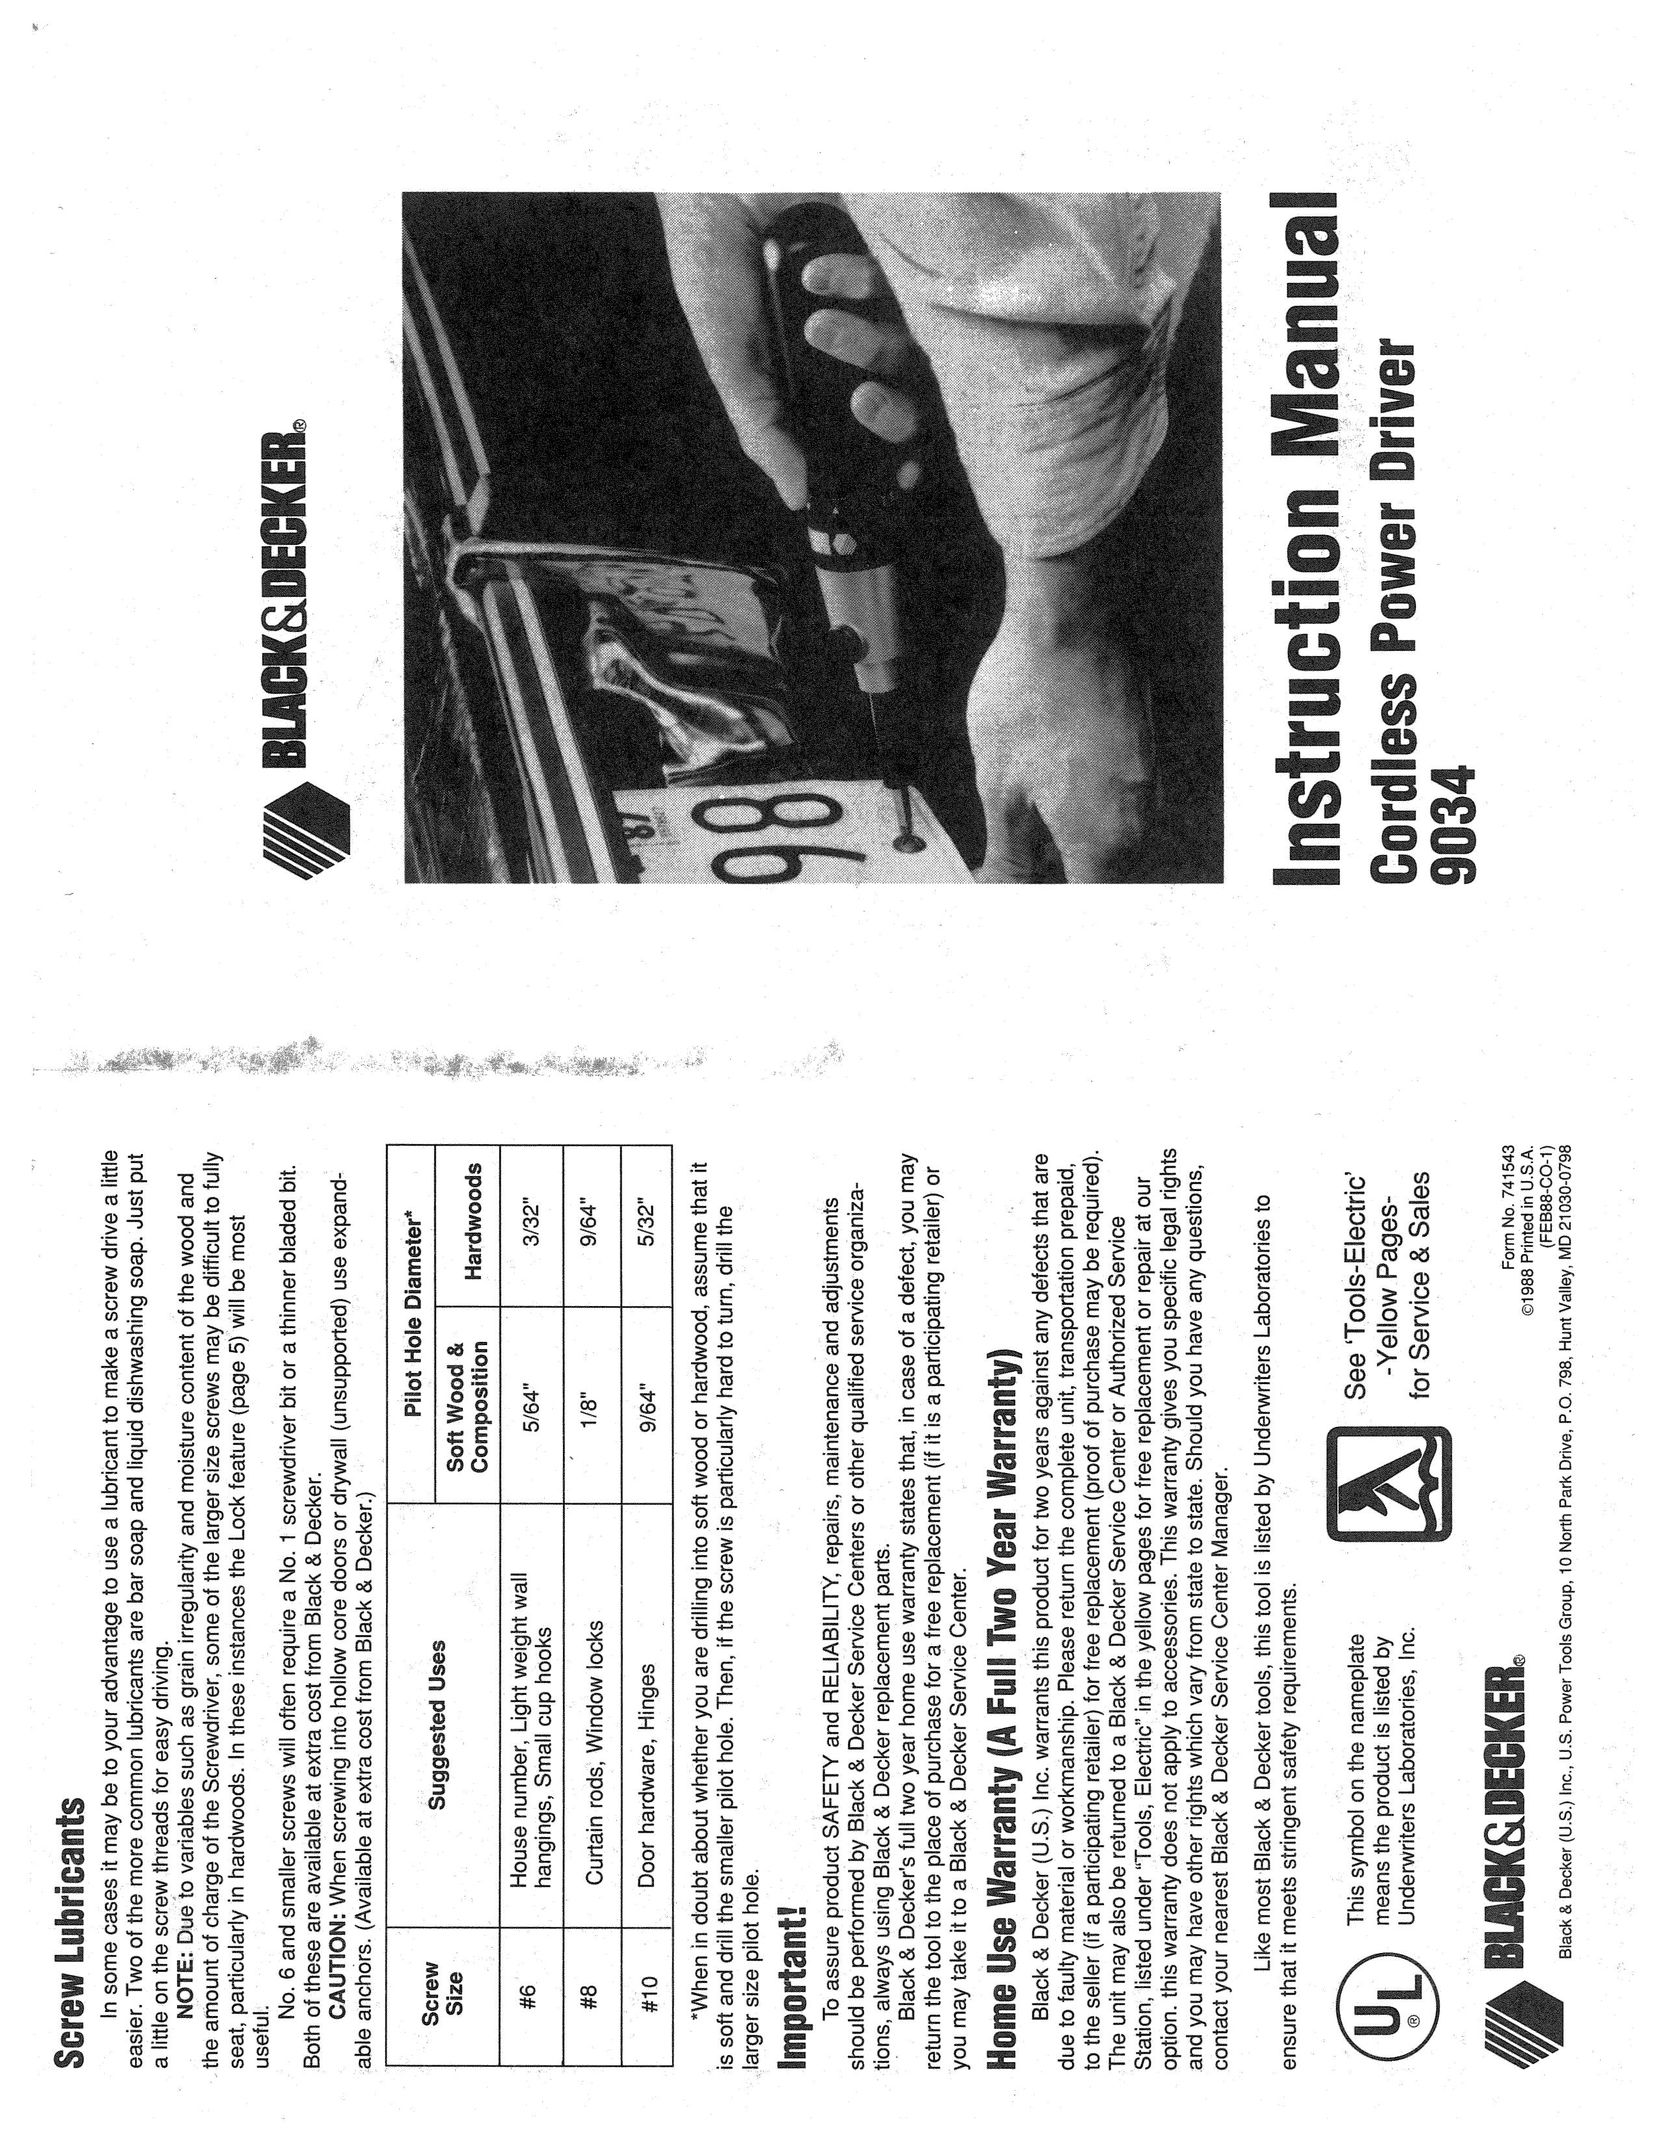 Black & Decker 9034 Cordless Drill User Manual